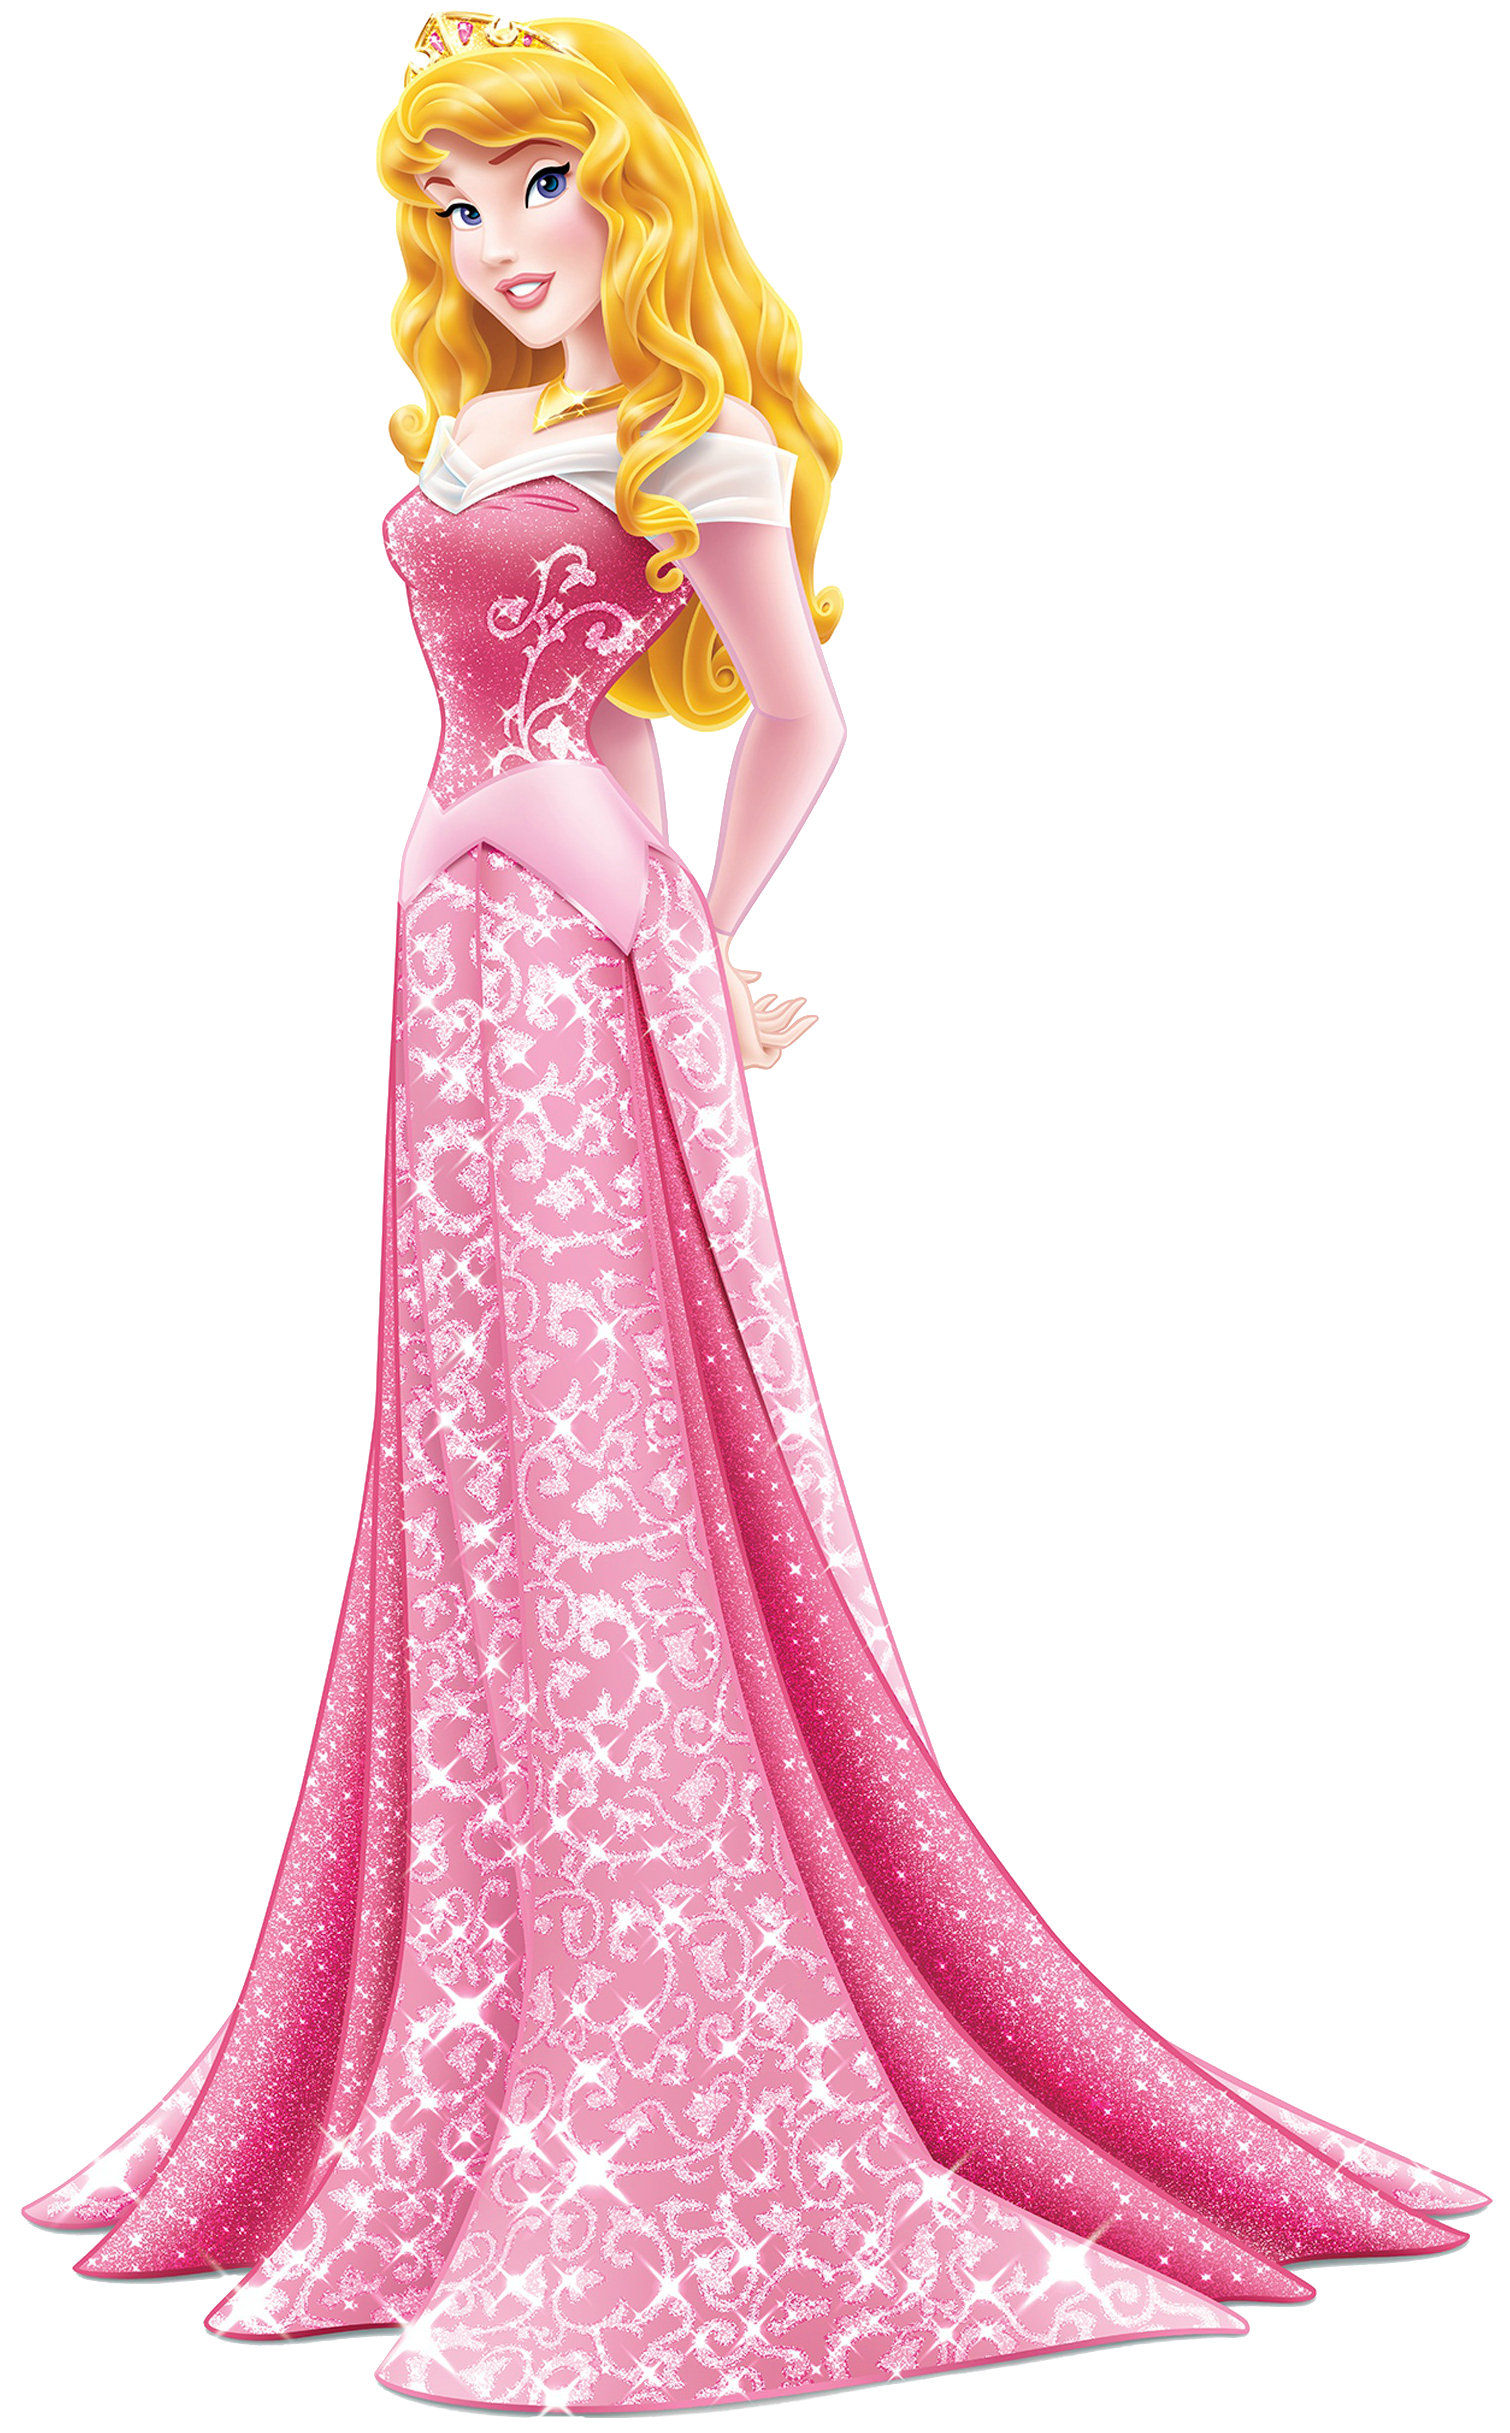 Rode datum Philadelphia onderdelen Disney Princess | Disney wiki | Fandom